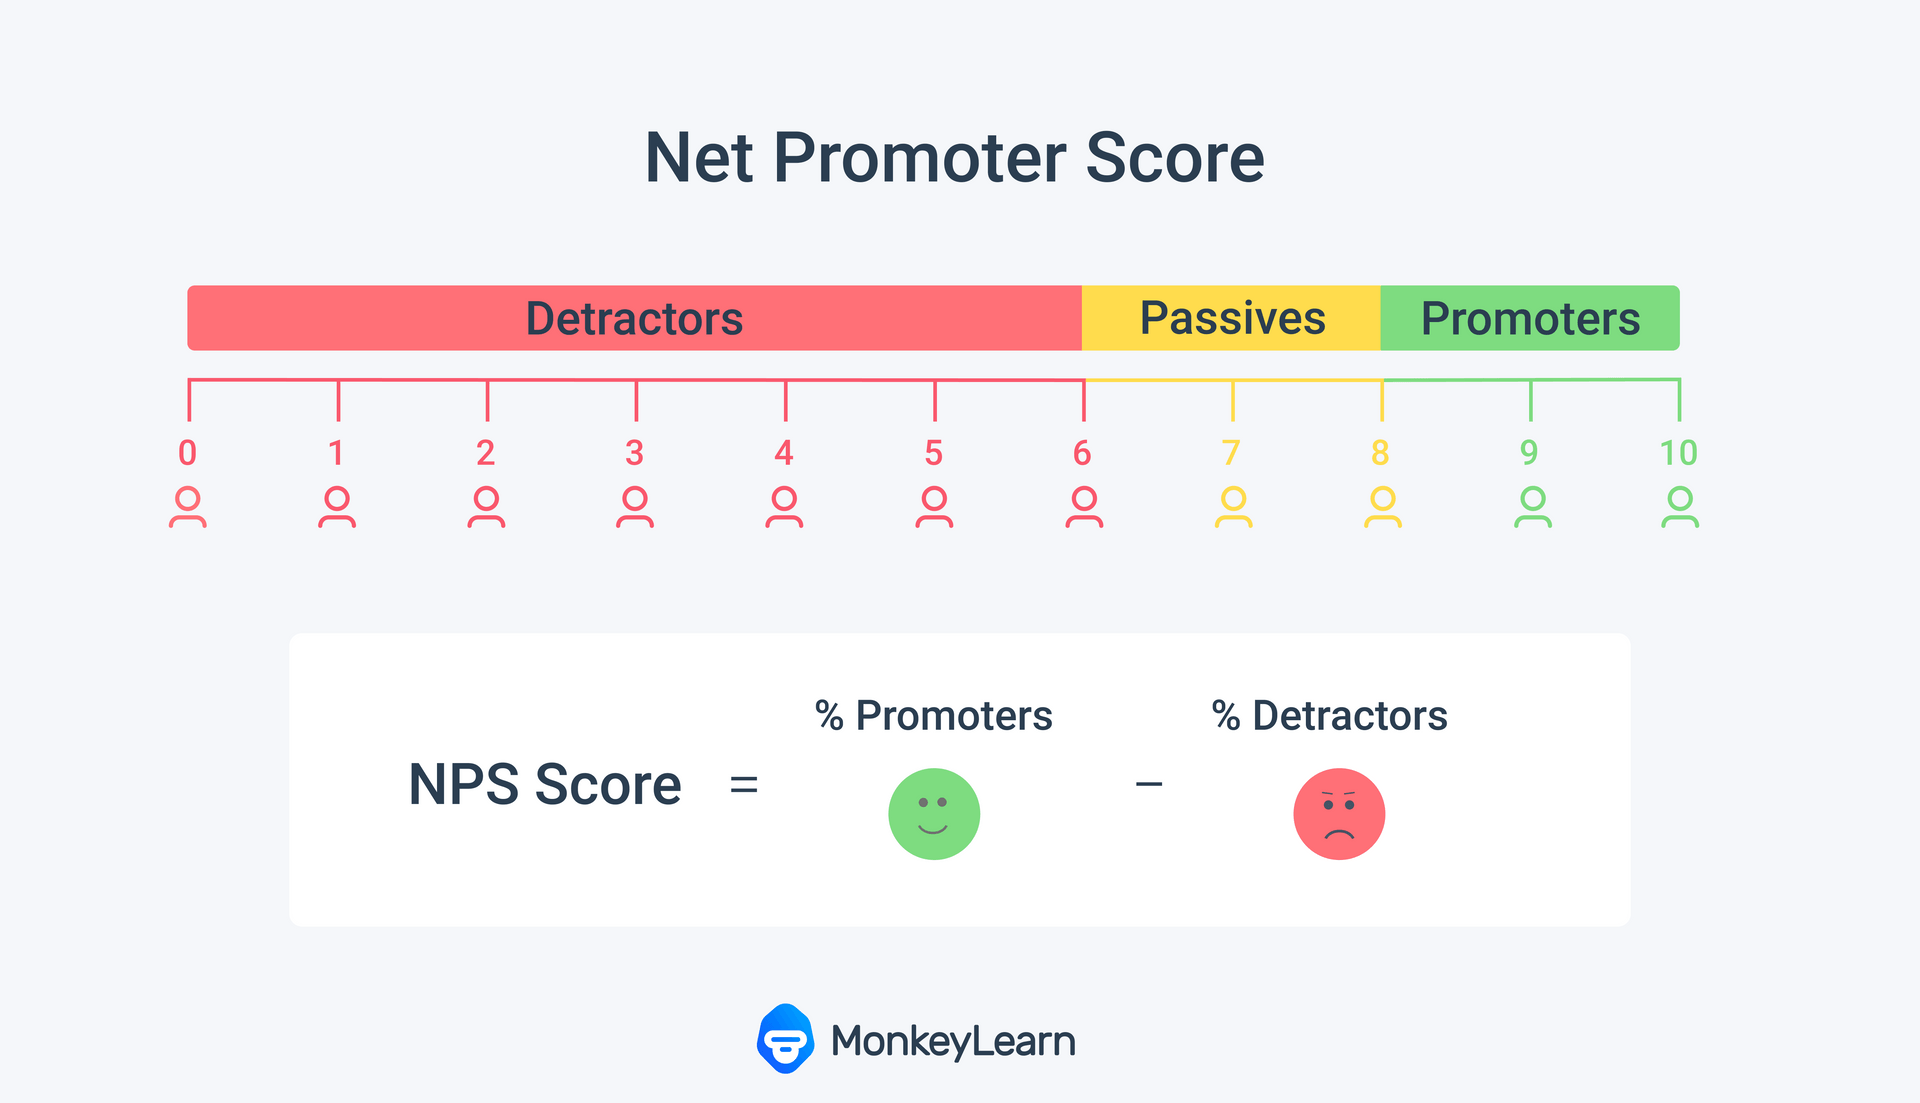 Employee Net Promoter Score Chart showing 9-10: Promoters, 7-8: Passives and 0-6: Detractors